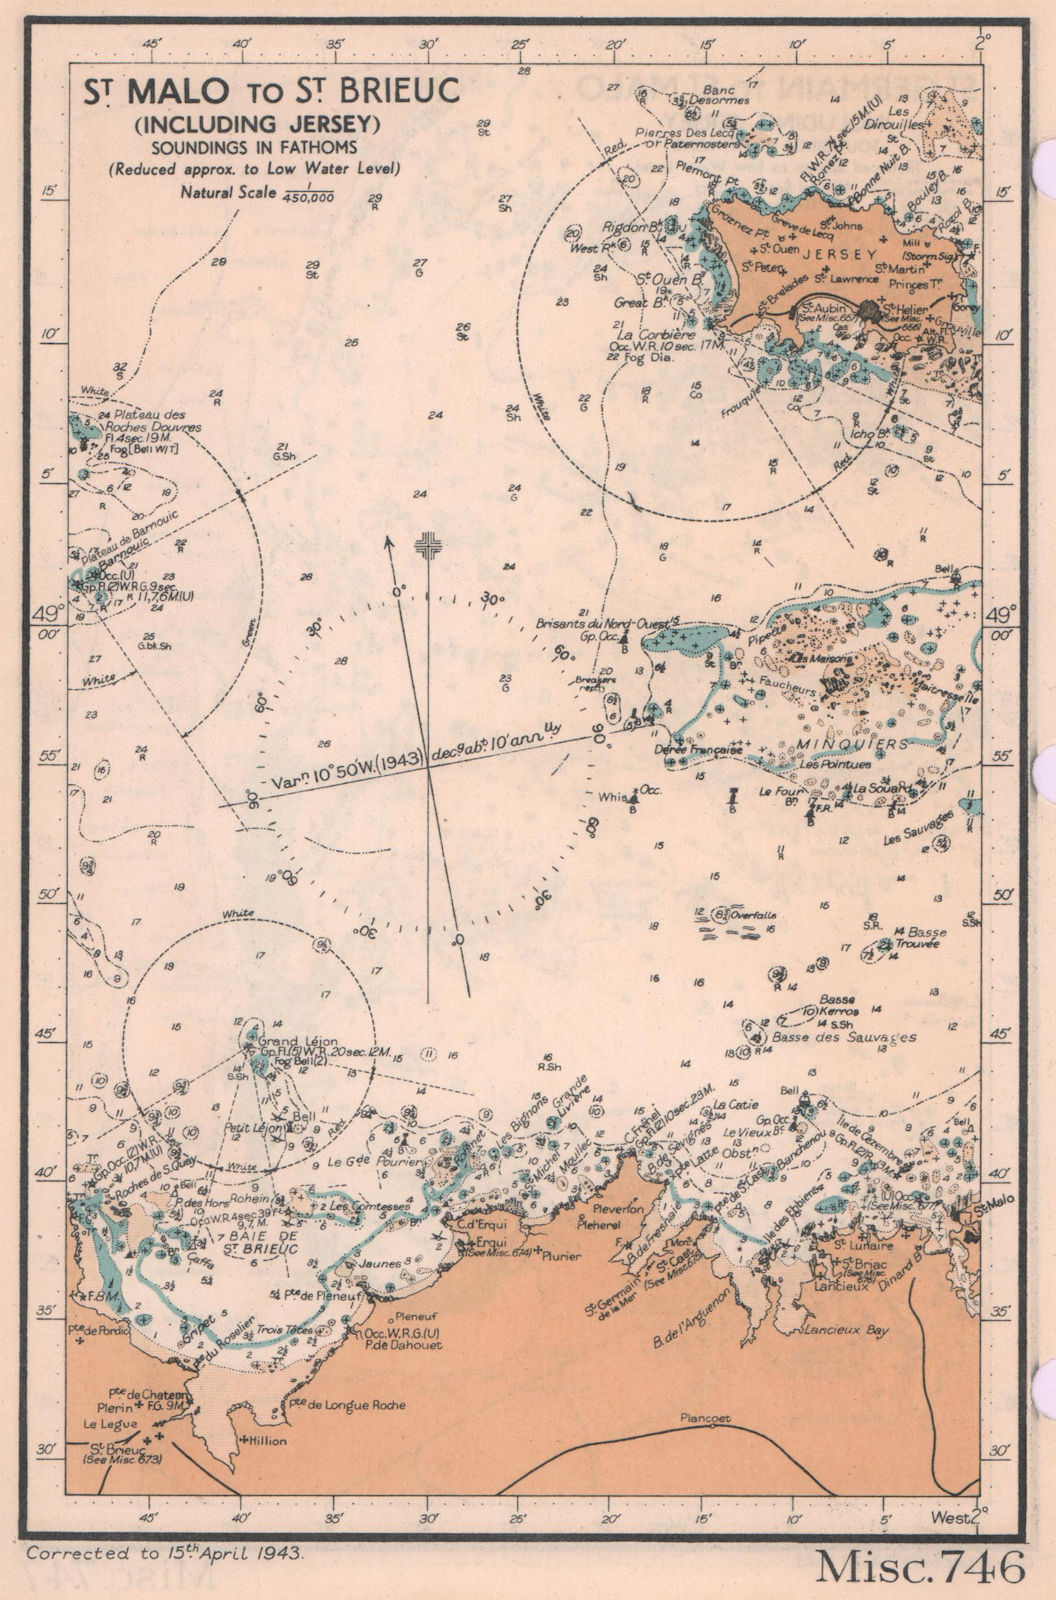 St. Malo - St. Brieuc Jersey sea coast chart. D-Day planning map. ADMIRALTY 1943